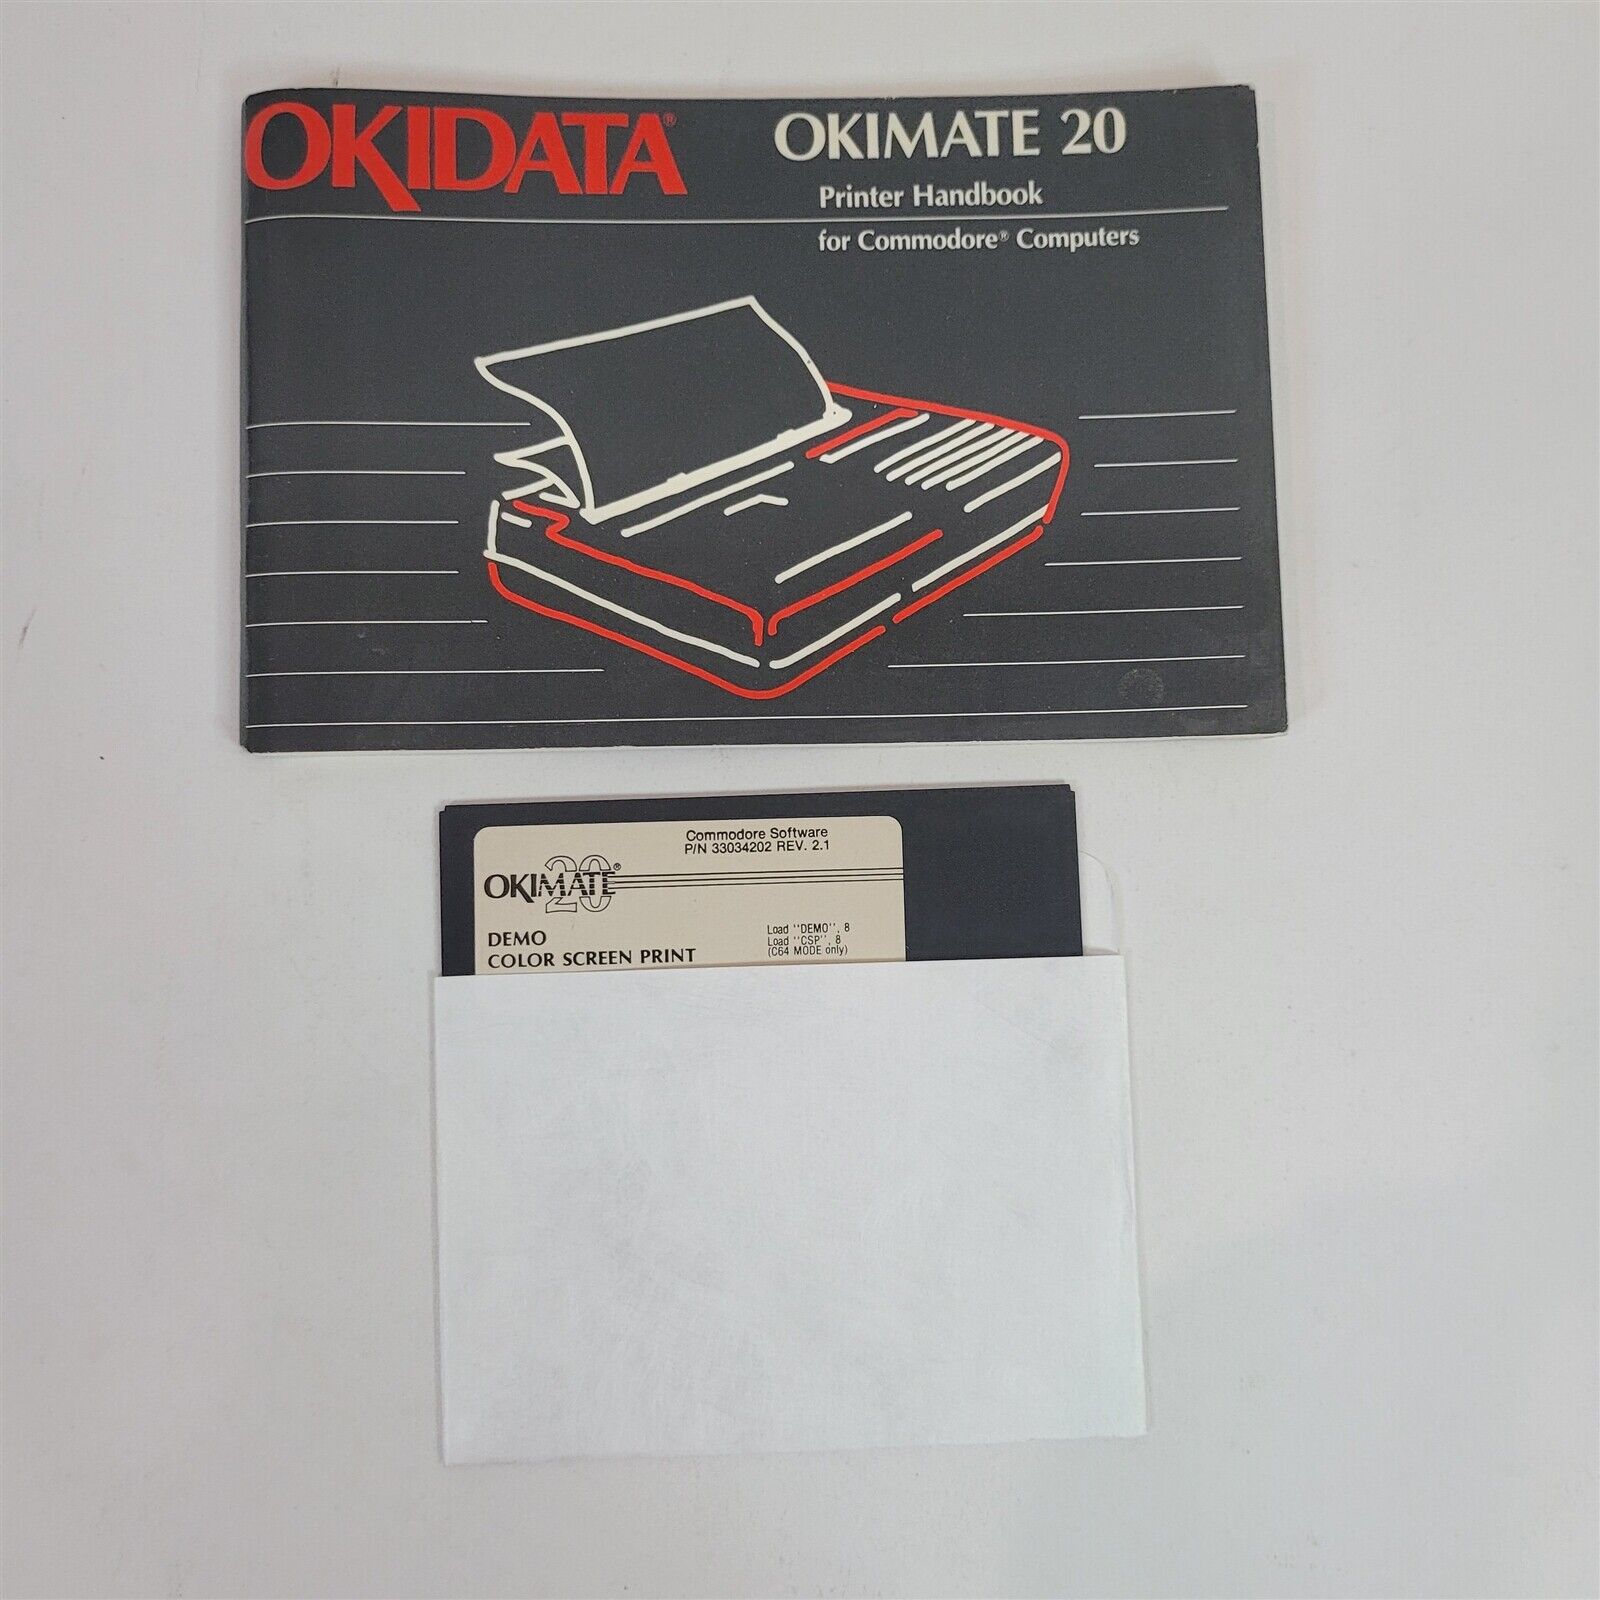 VTG 1986 Original Okidata Okimate 20 Printer Handbook for Commodore Computers